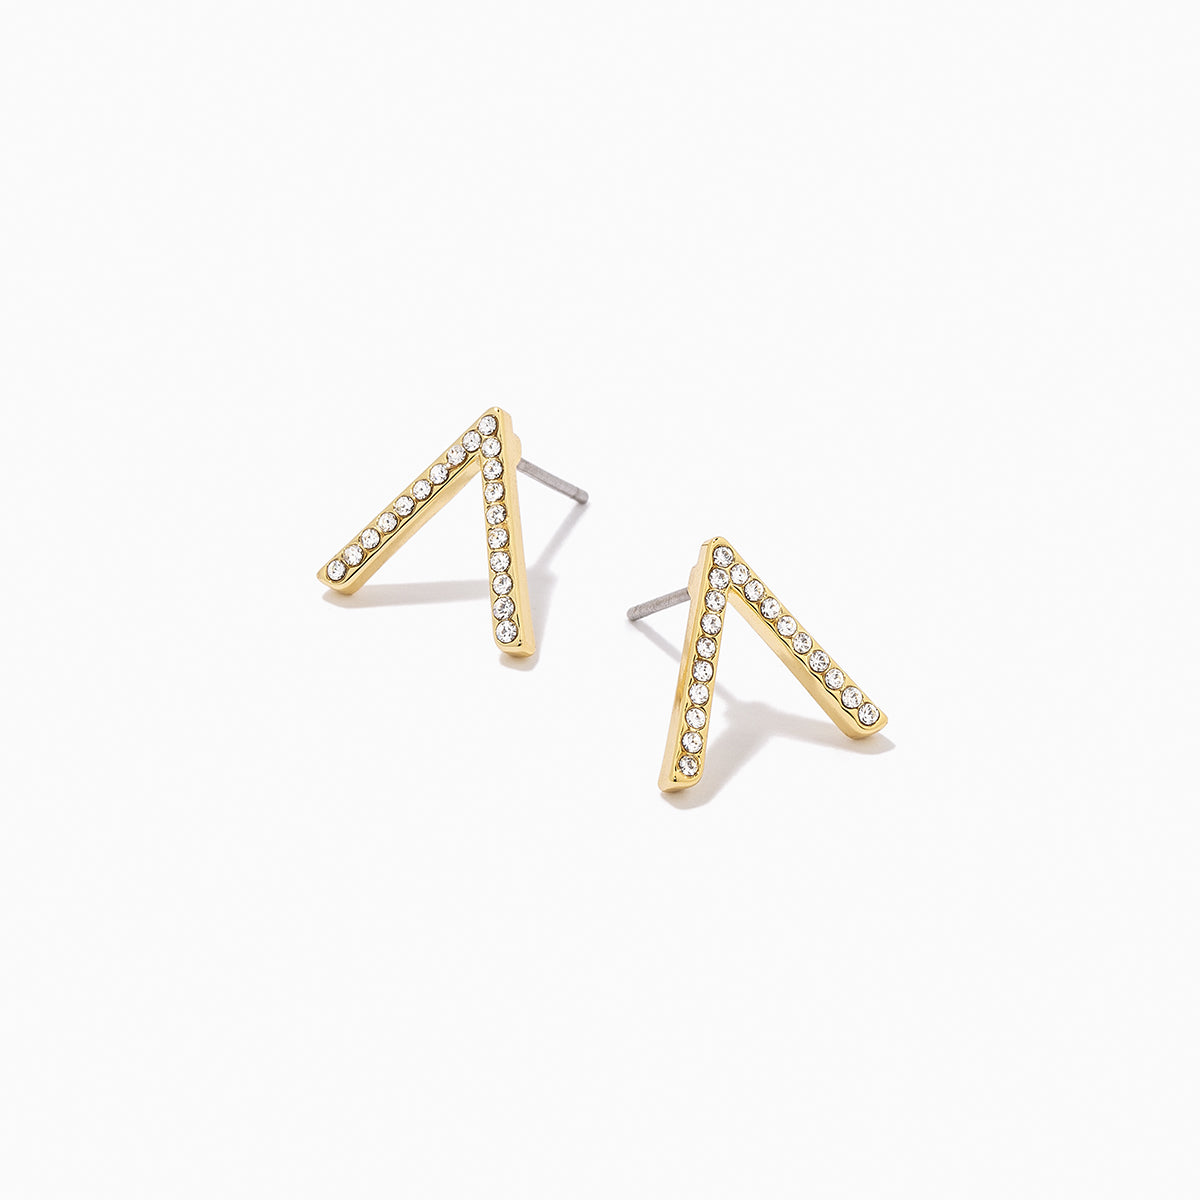 Little Stud Earrings | Gold | Product Image | Uncommon James